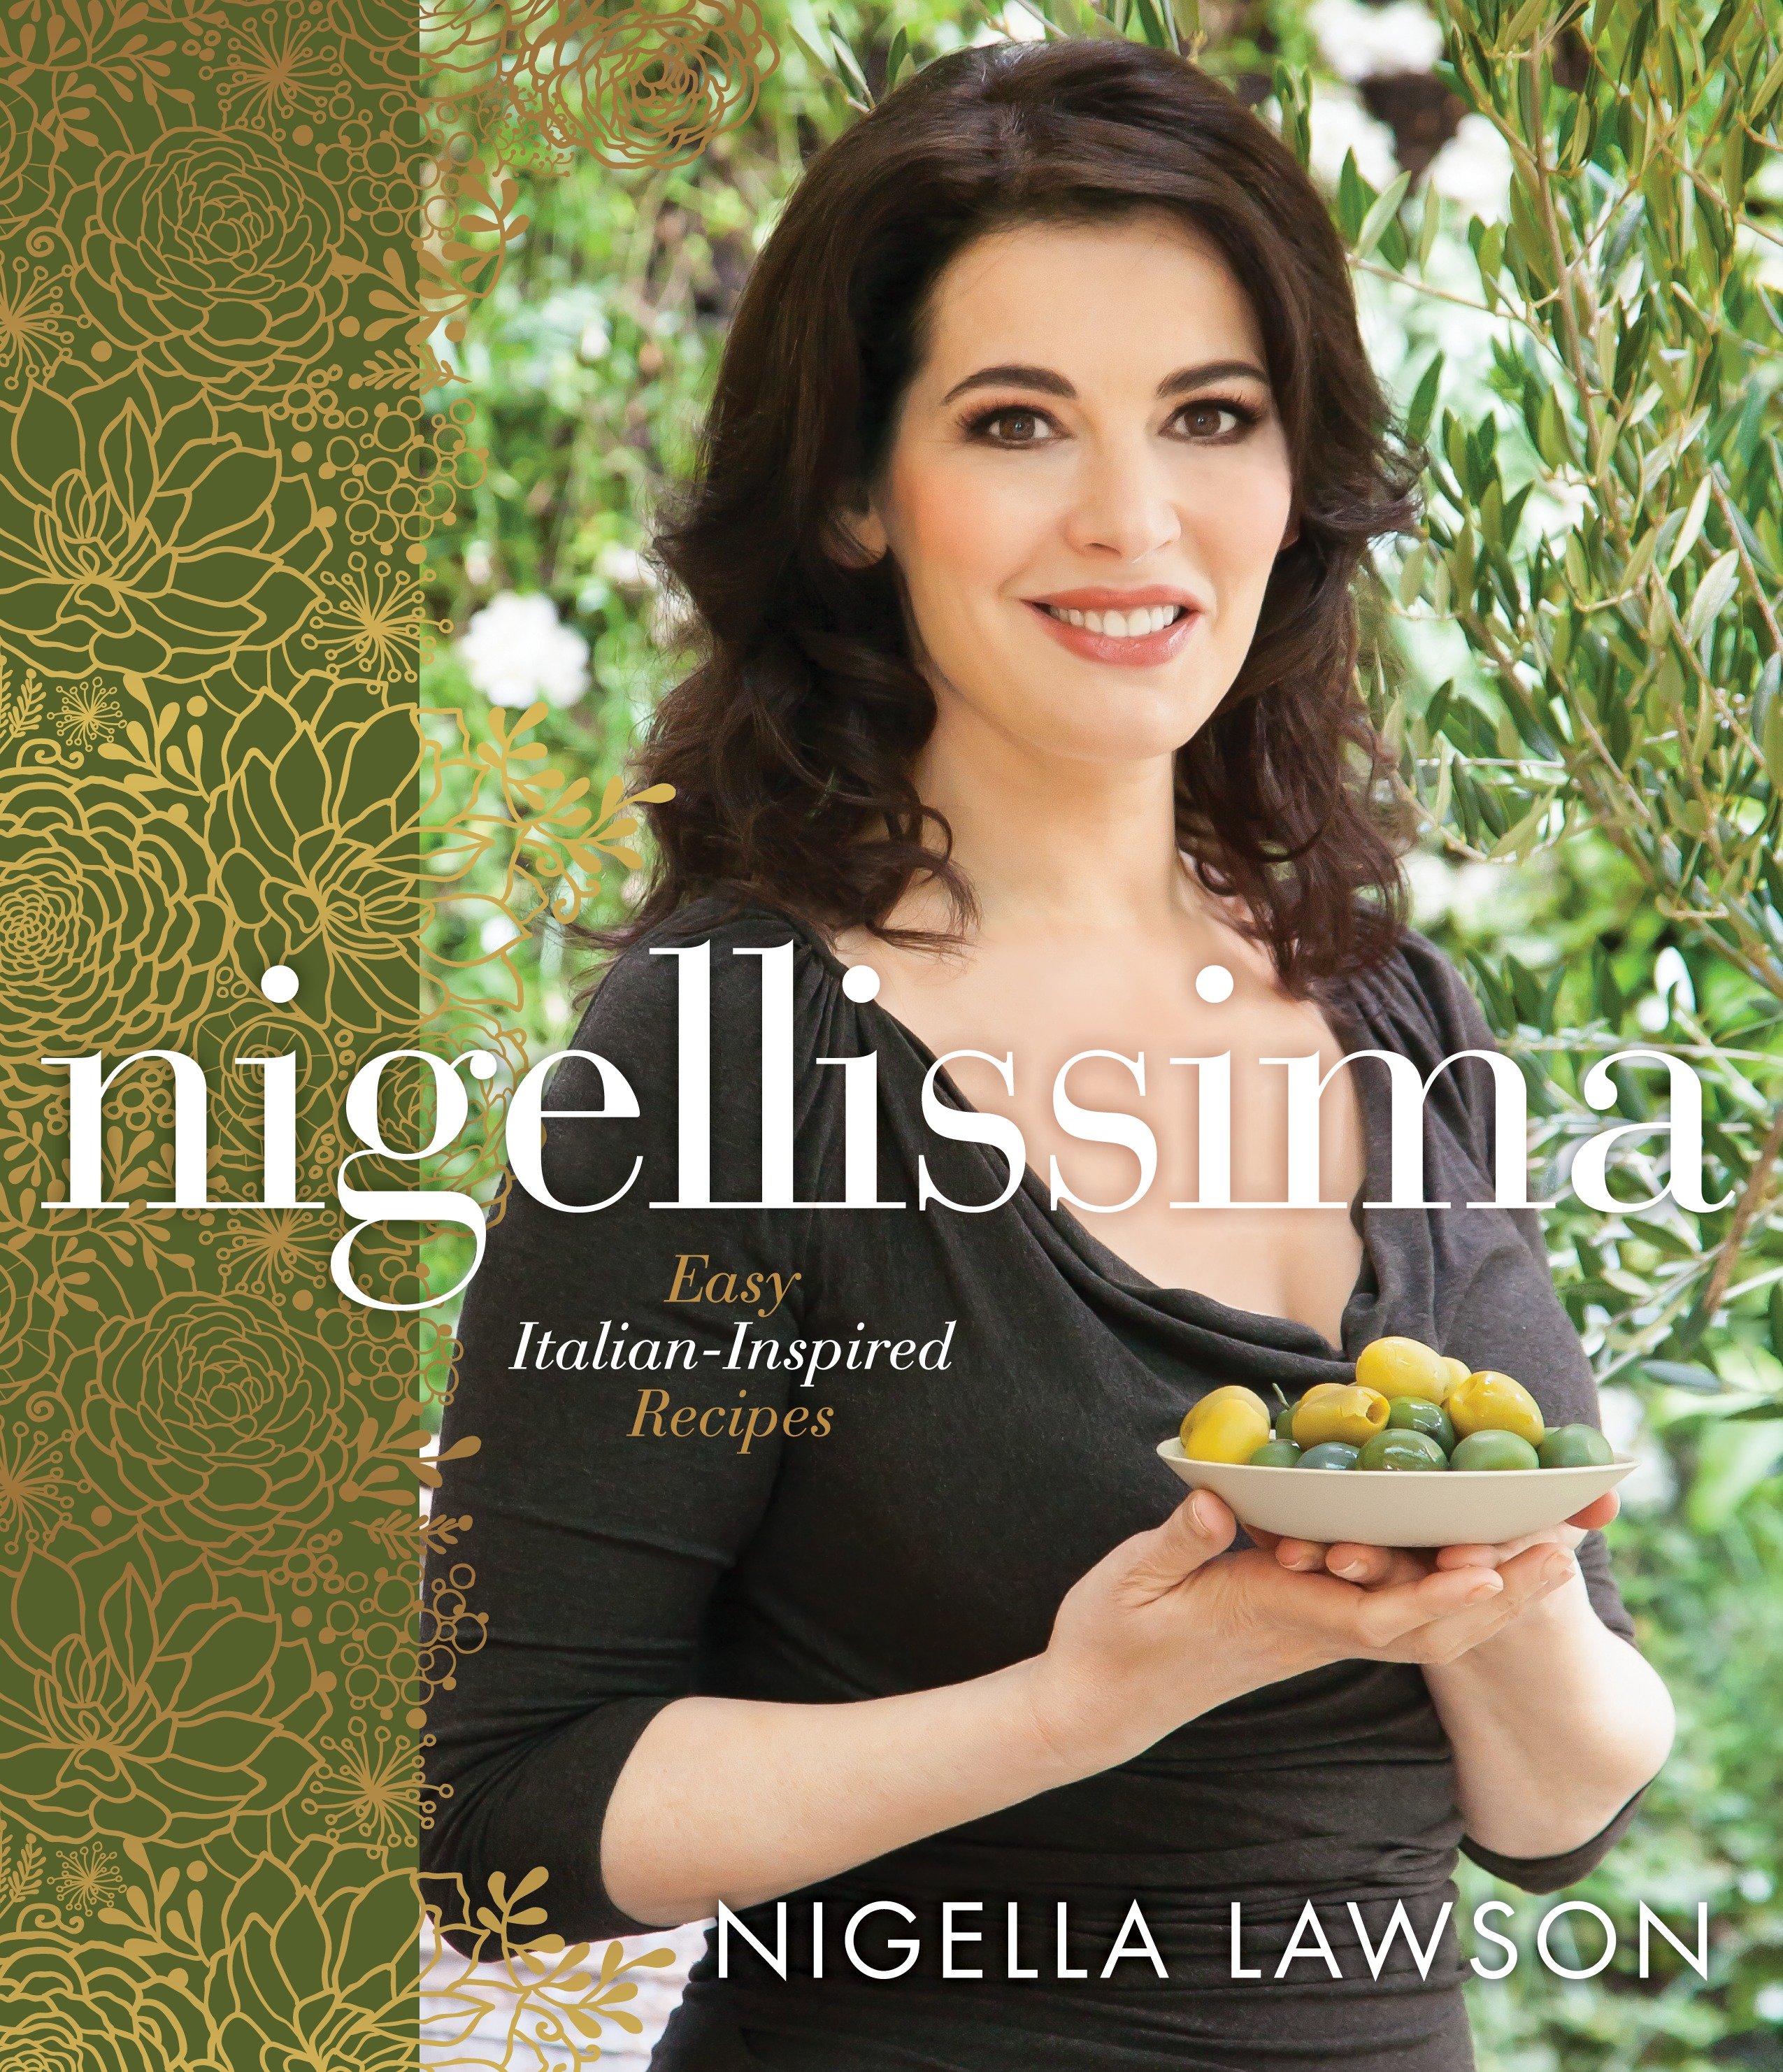 Nigellissima easy Italian-inspired recipes cover image